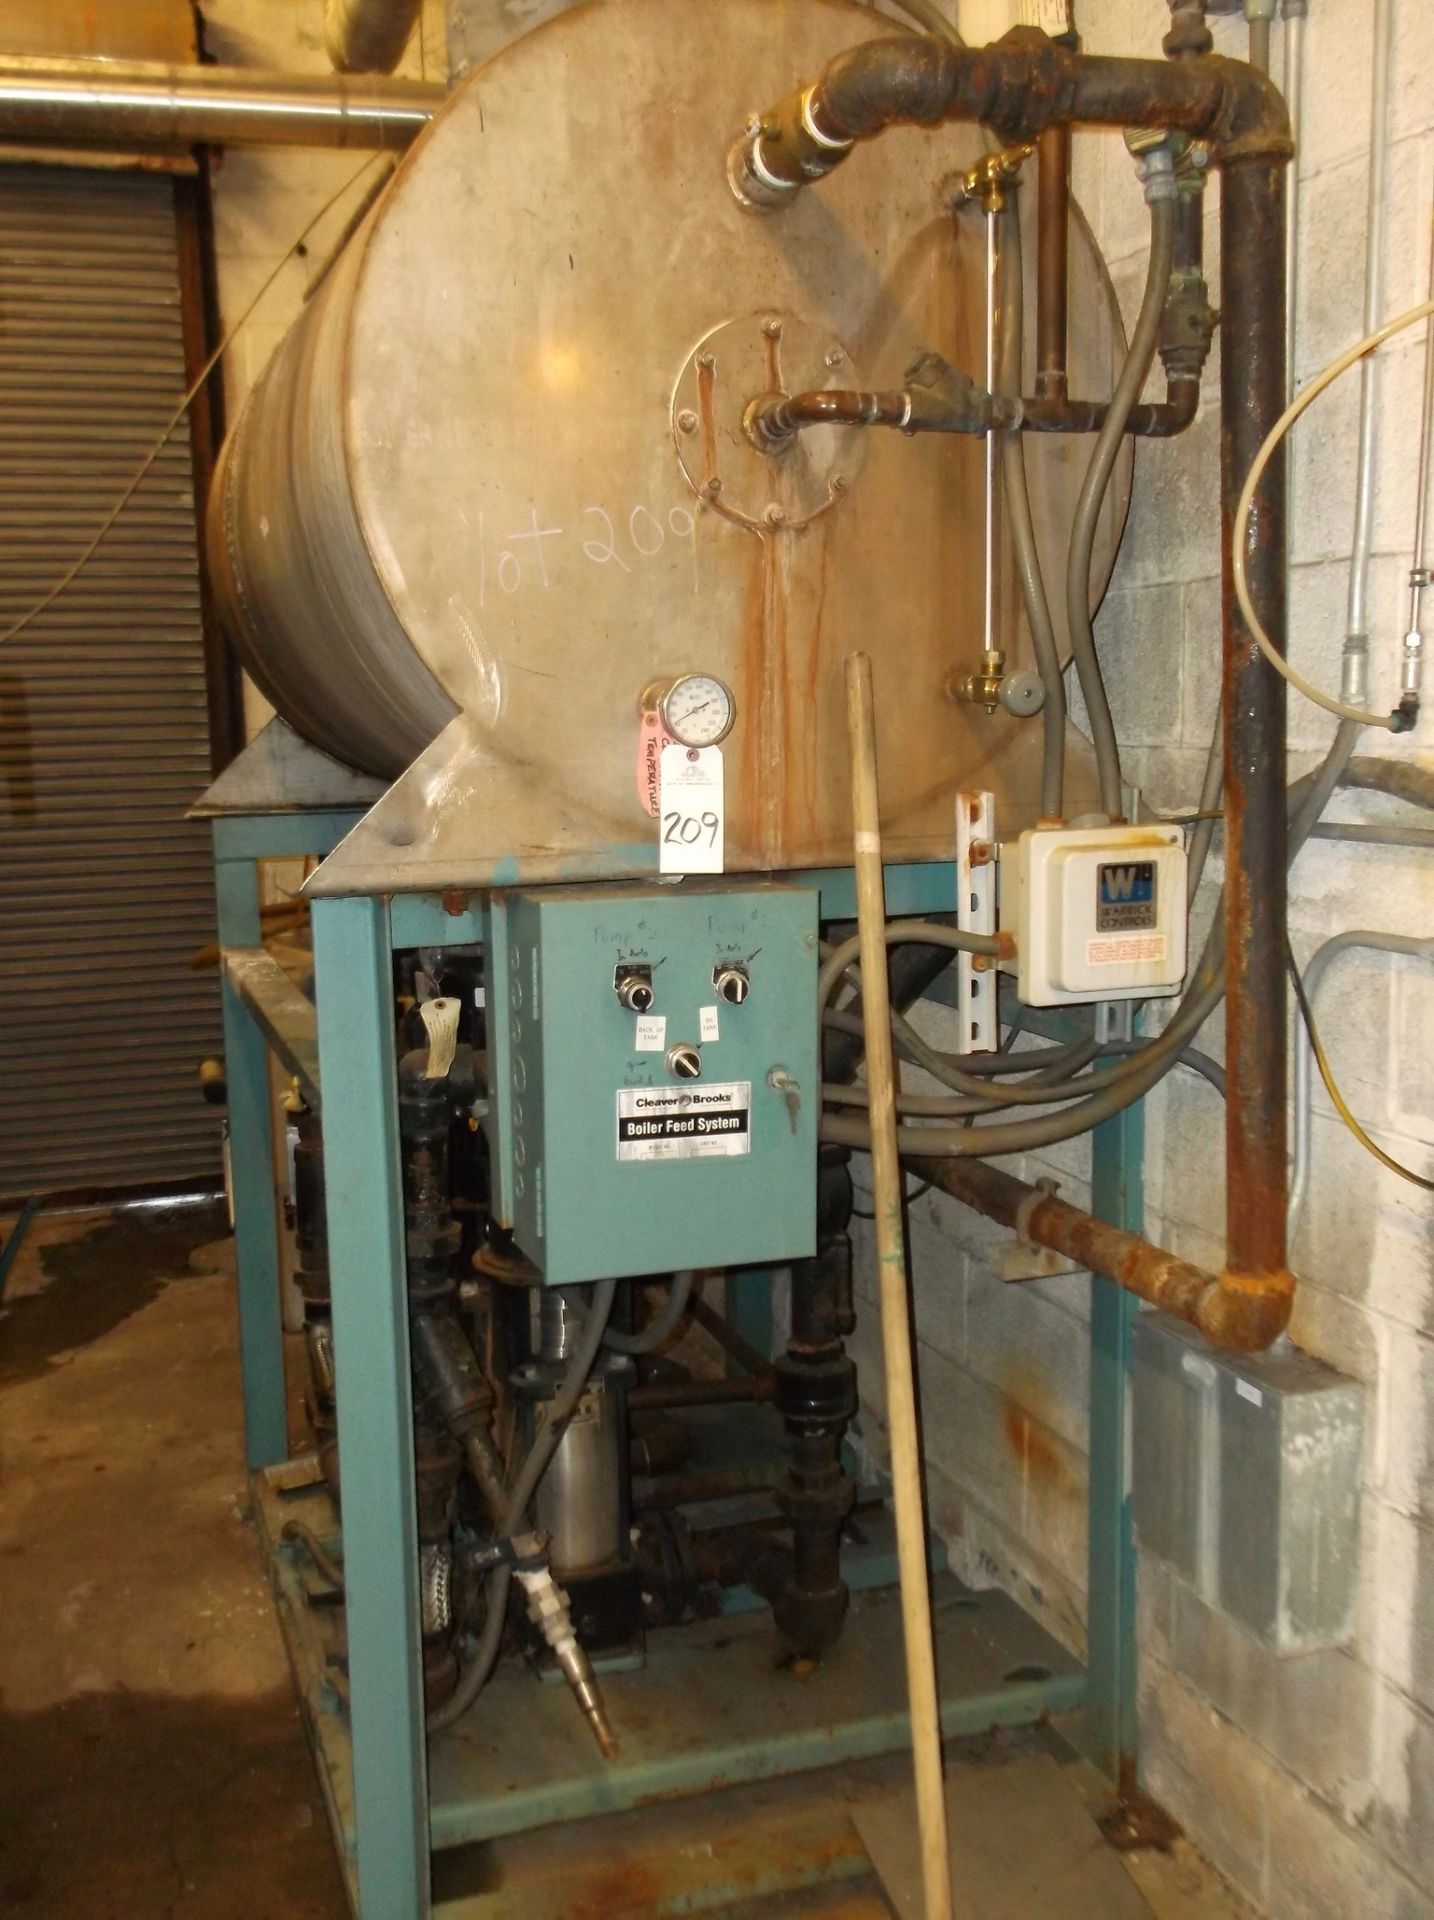 Cleaver Brooks Boiler make up water system. Skid mounted. S/N FG | Rigging/Loading Fee: $1500